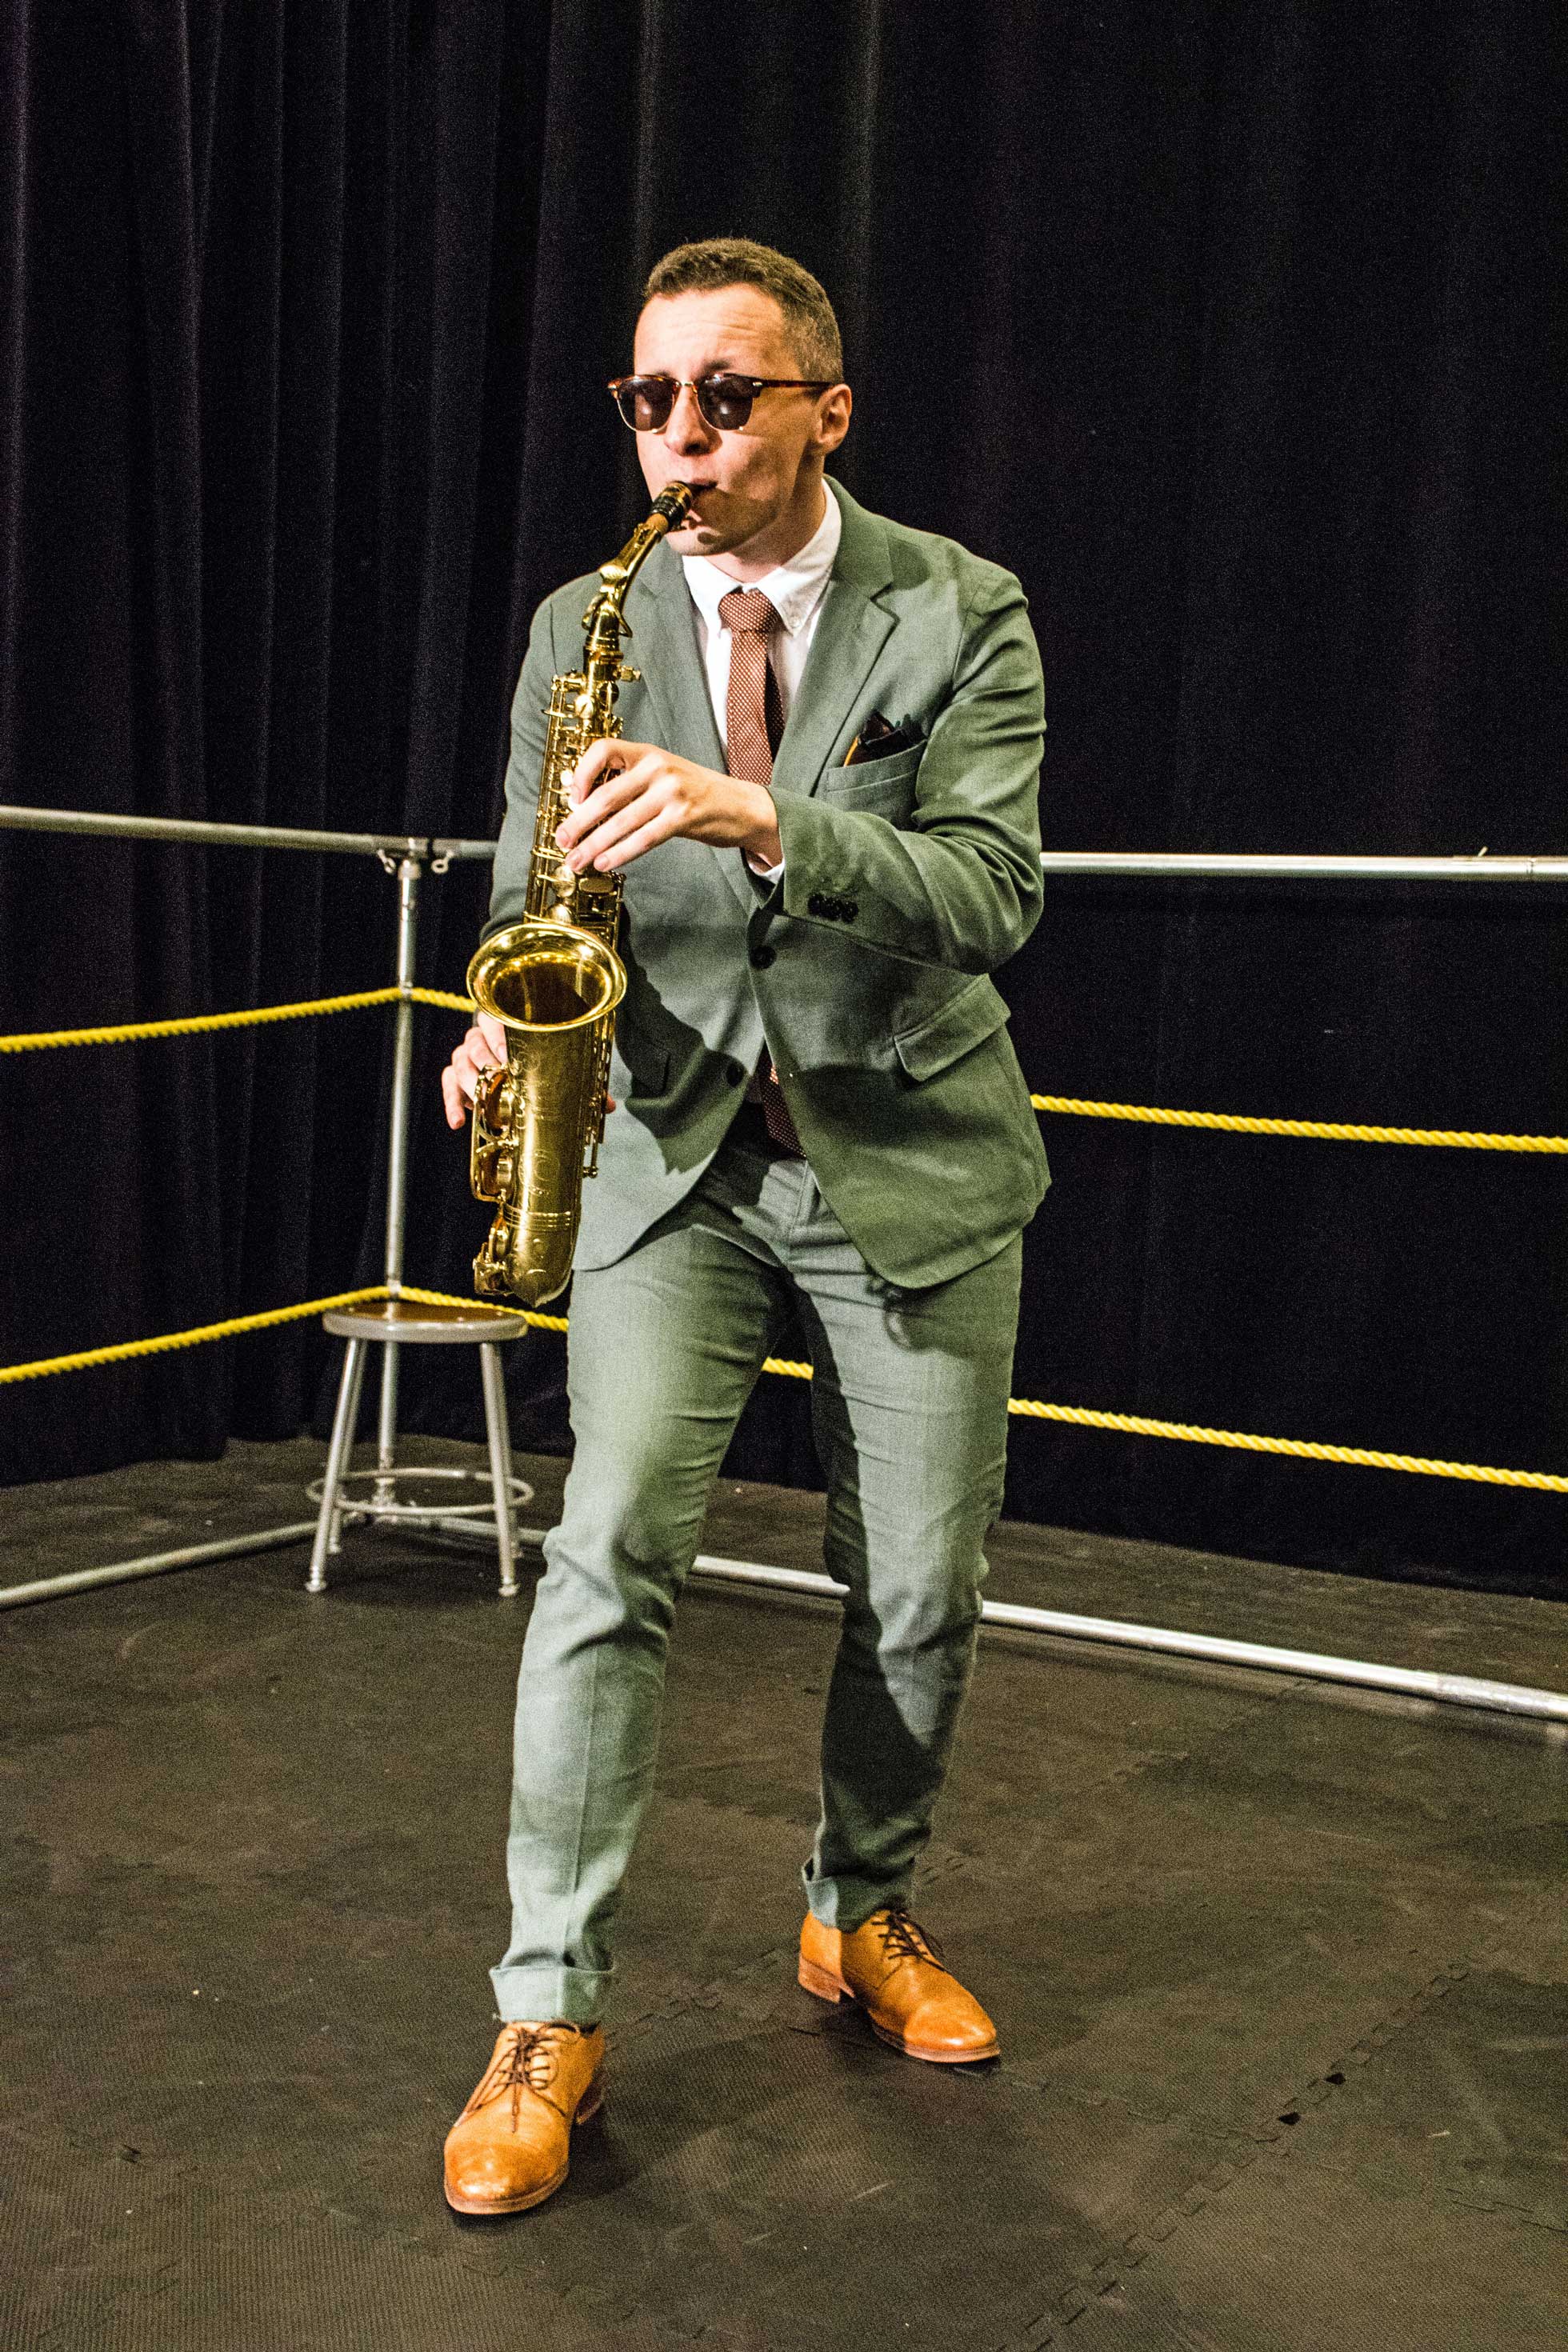 Recent KPU graduate Jay Reedy as The Jazz Man